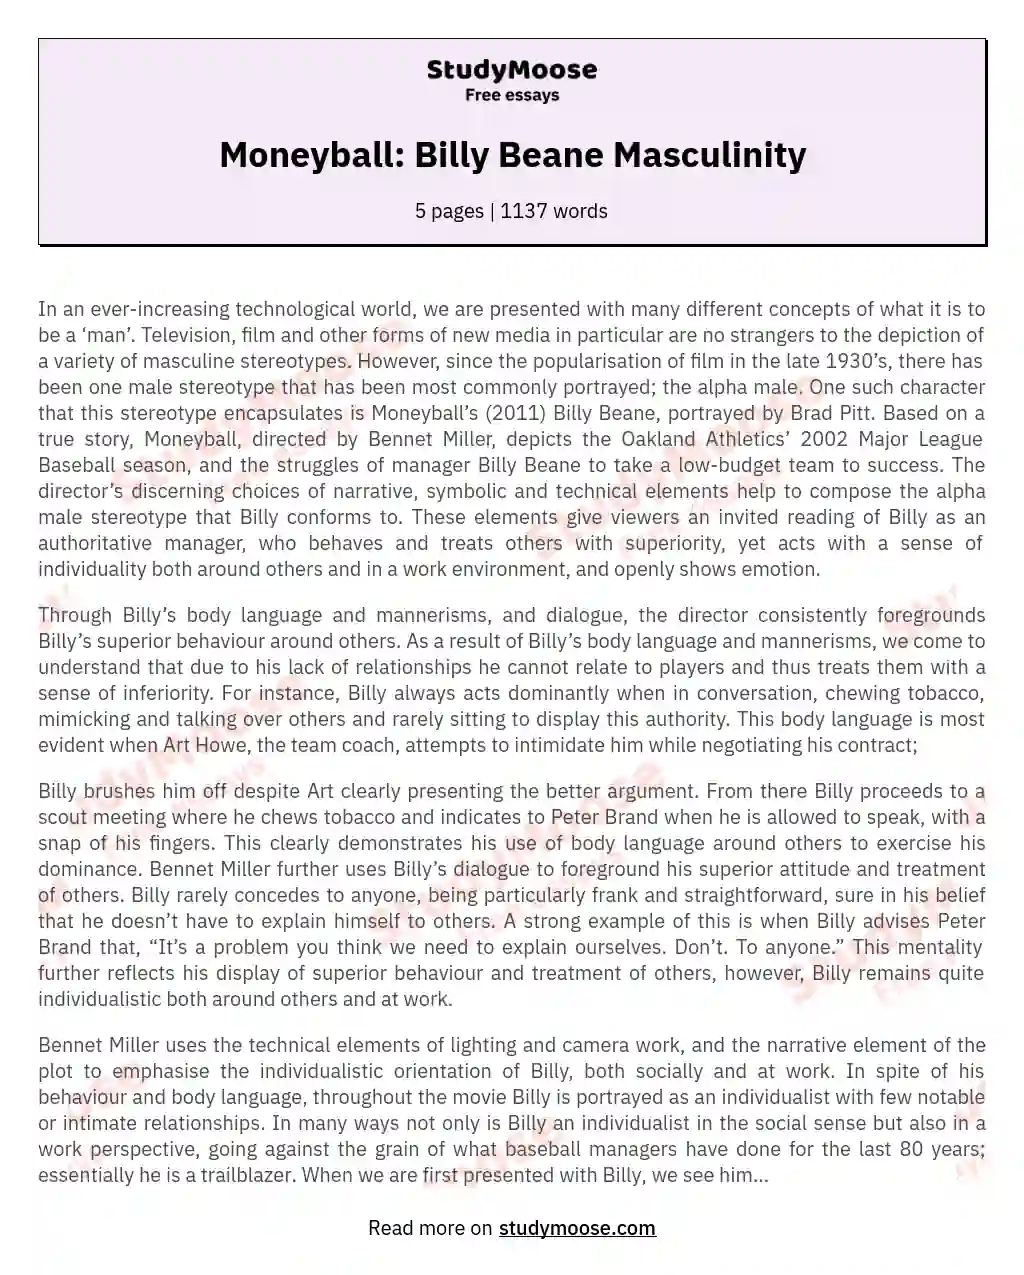 Moneyball: Billy Beane Masculinity essay